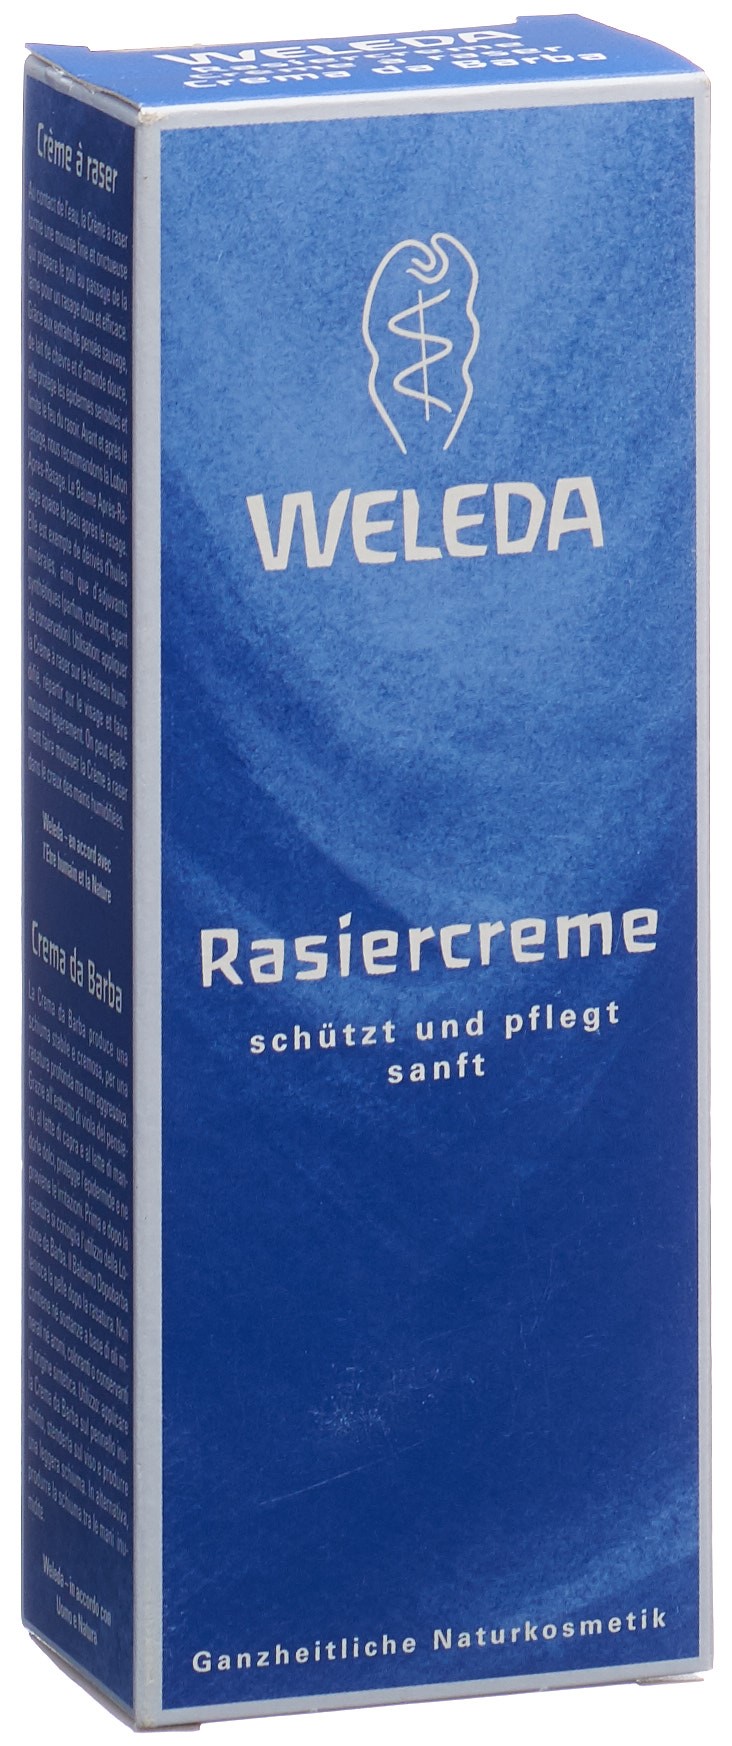 WELEDA Rasiercrème 75 ml